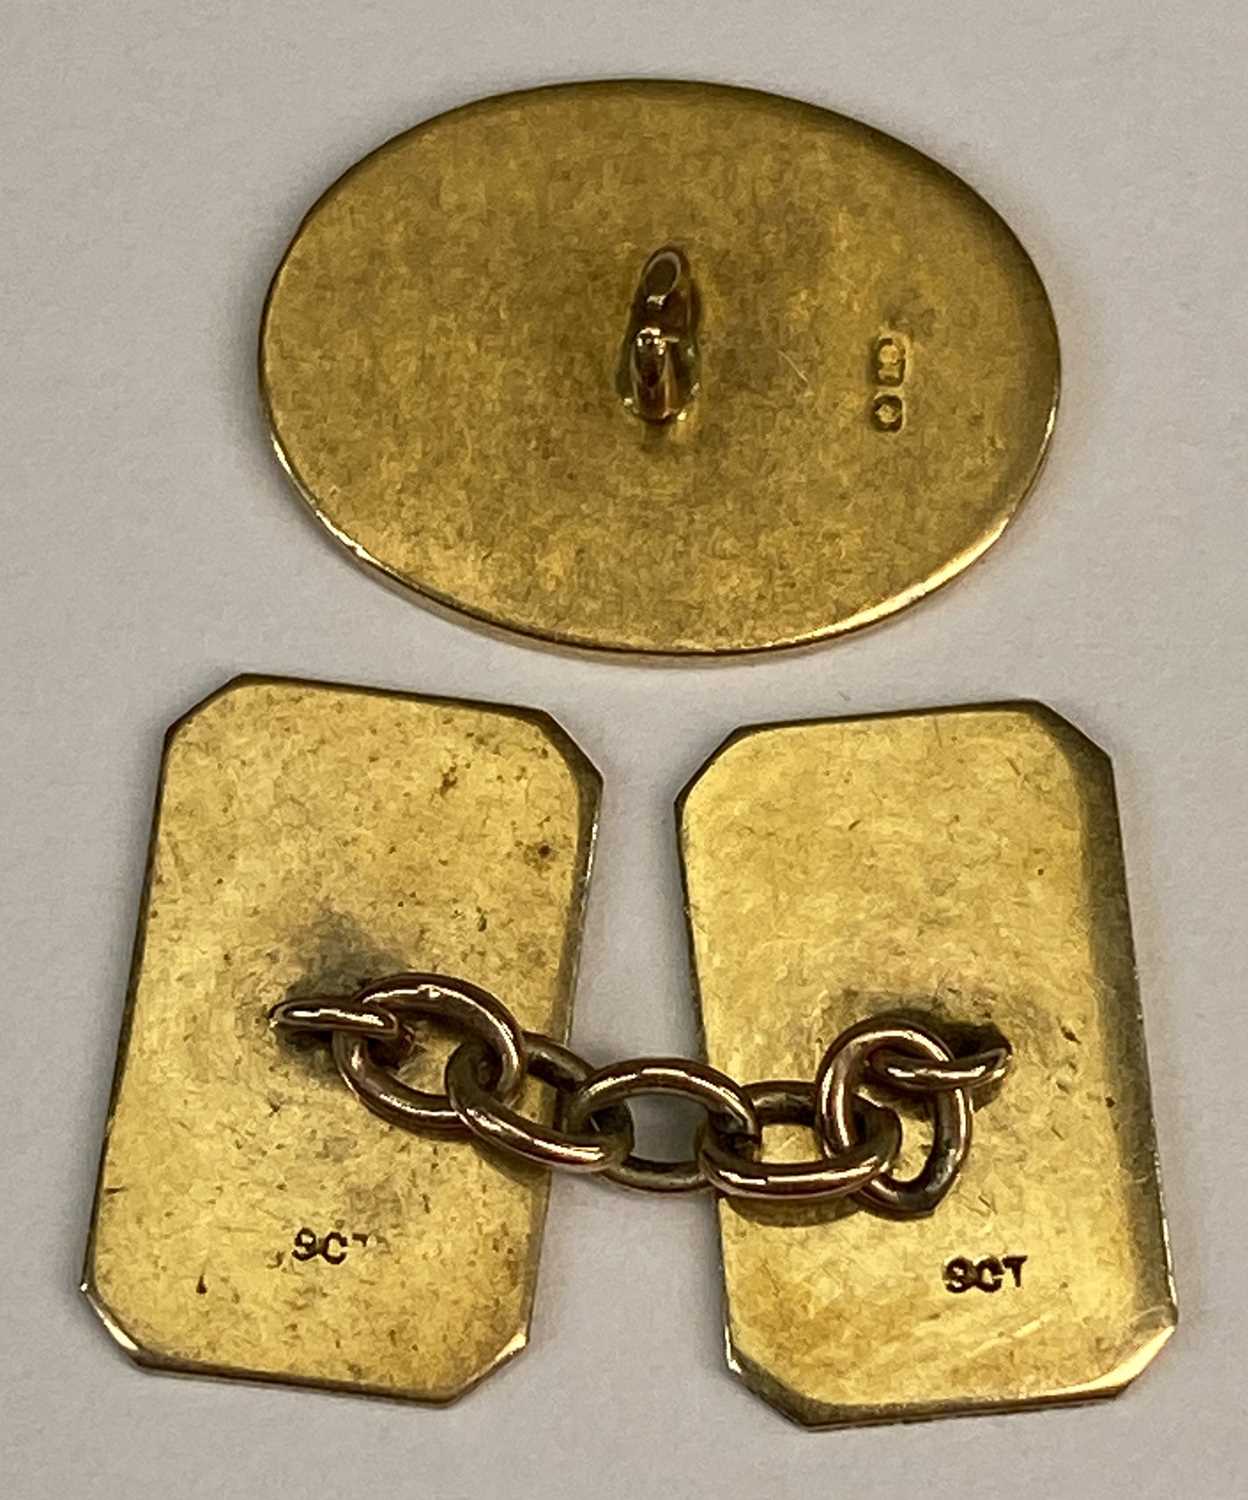 GOLD/YELLOW METAL GROUP comprising three large yellow metal signet rings, single cufflink, ETC - Image 2 of 3